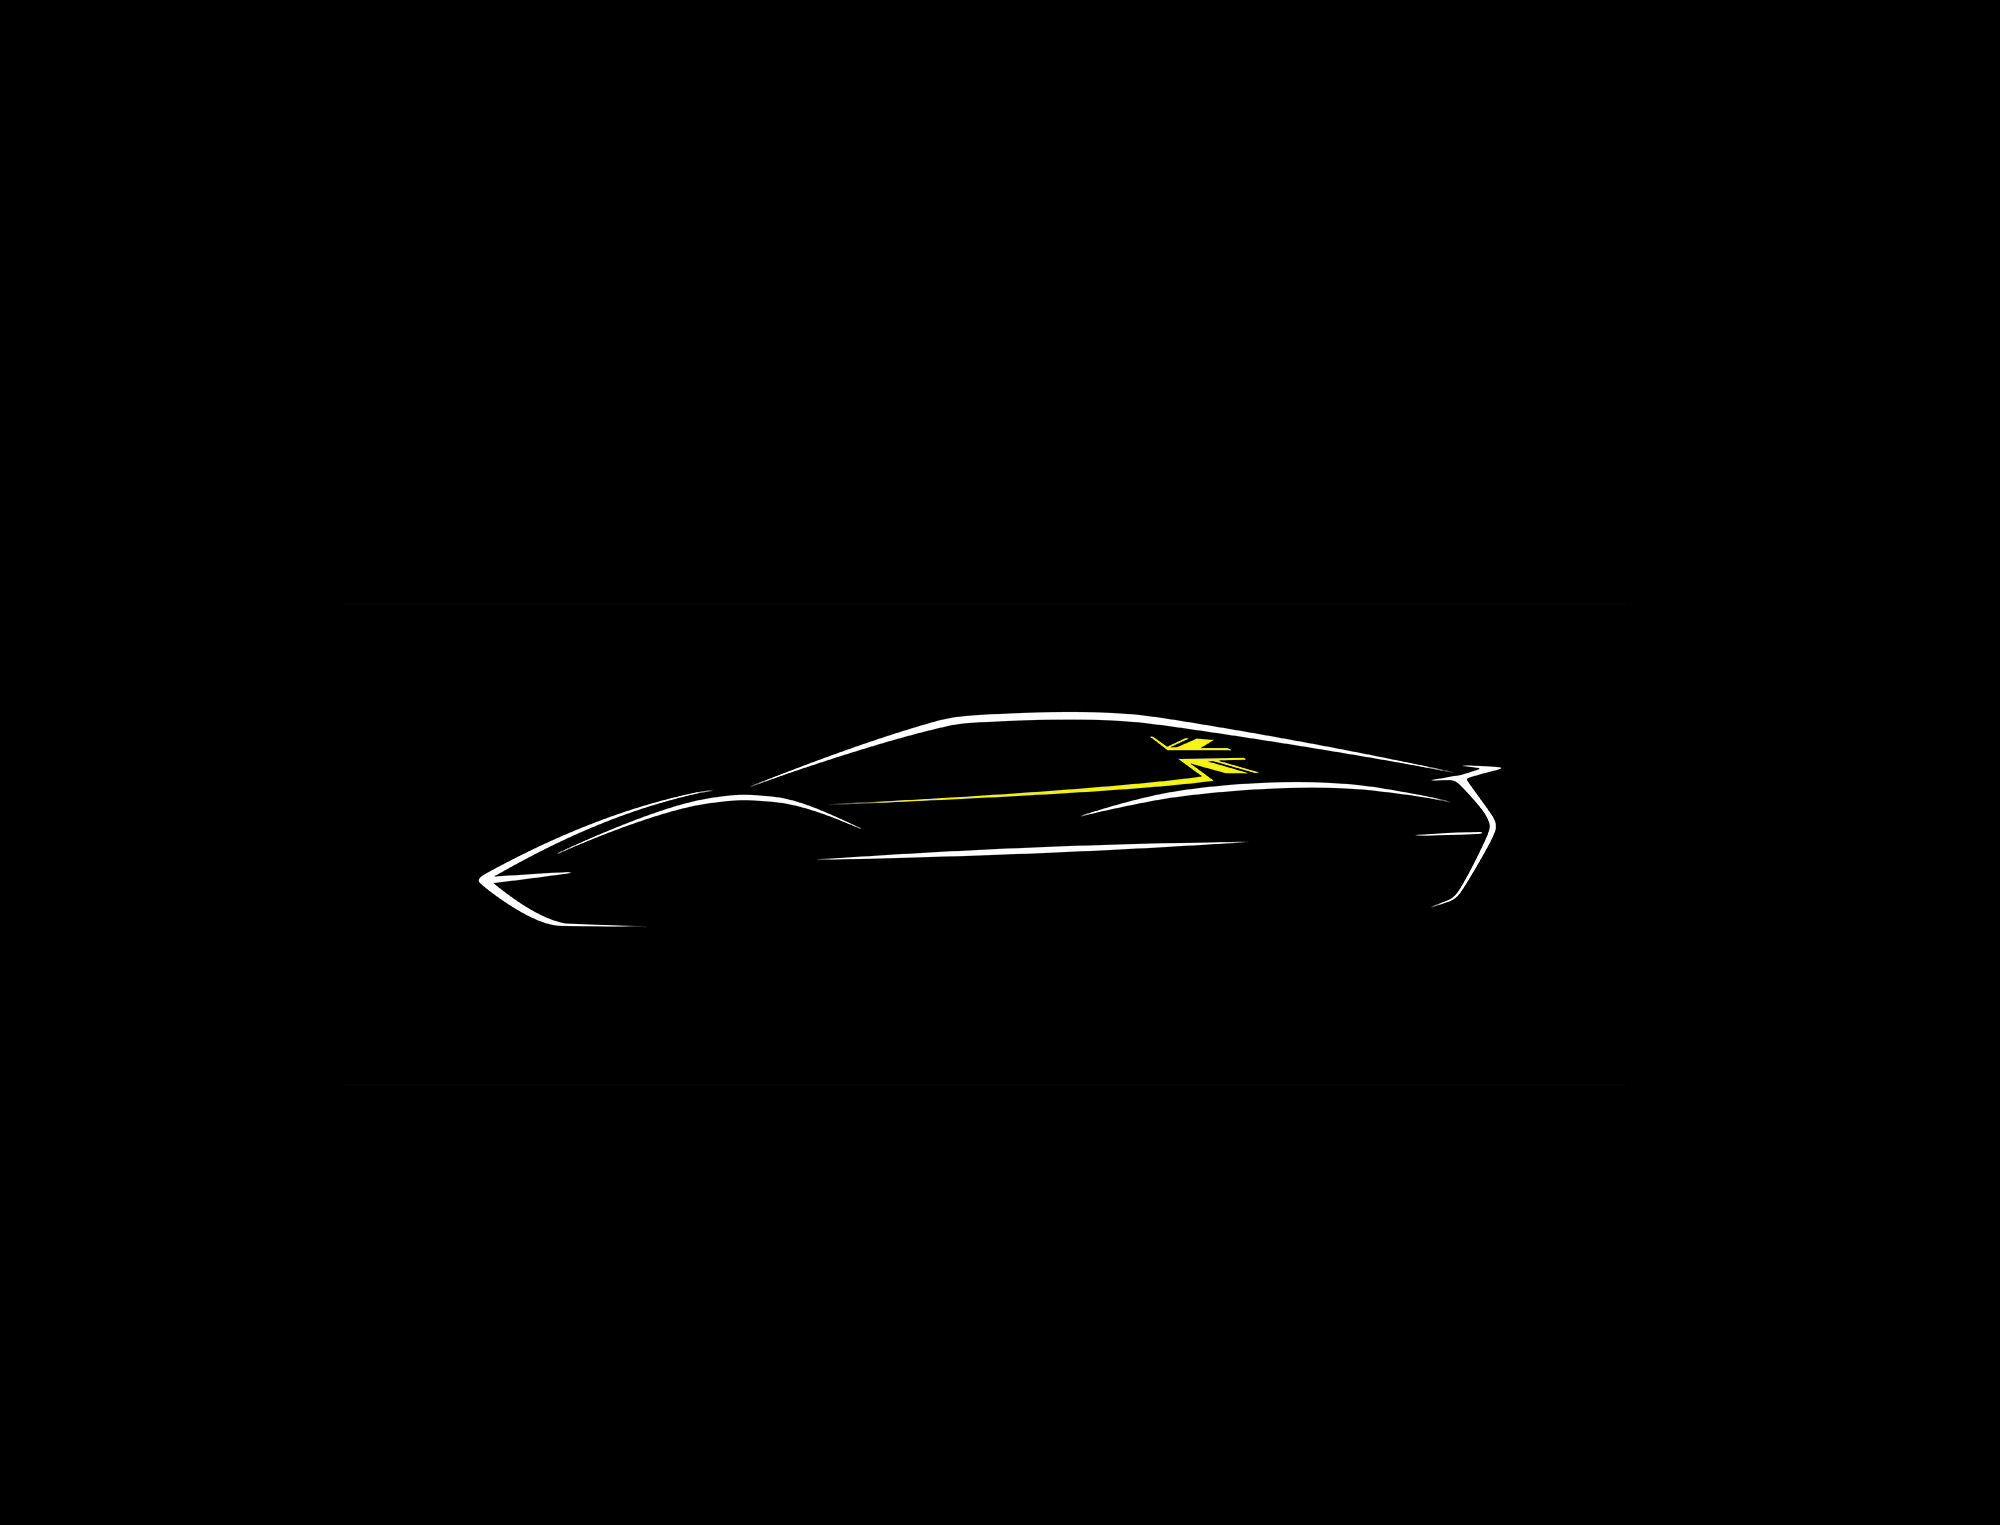 2022 Lotus Emira revealed: Lotus' last internal combustion sports car - CNET